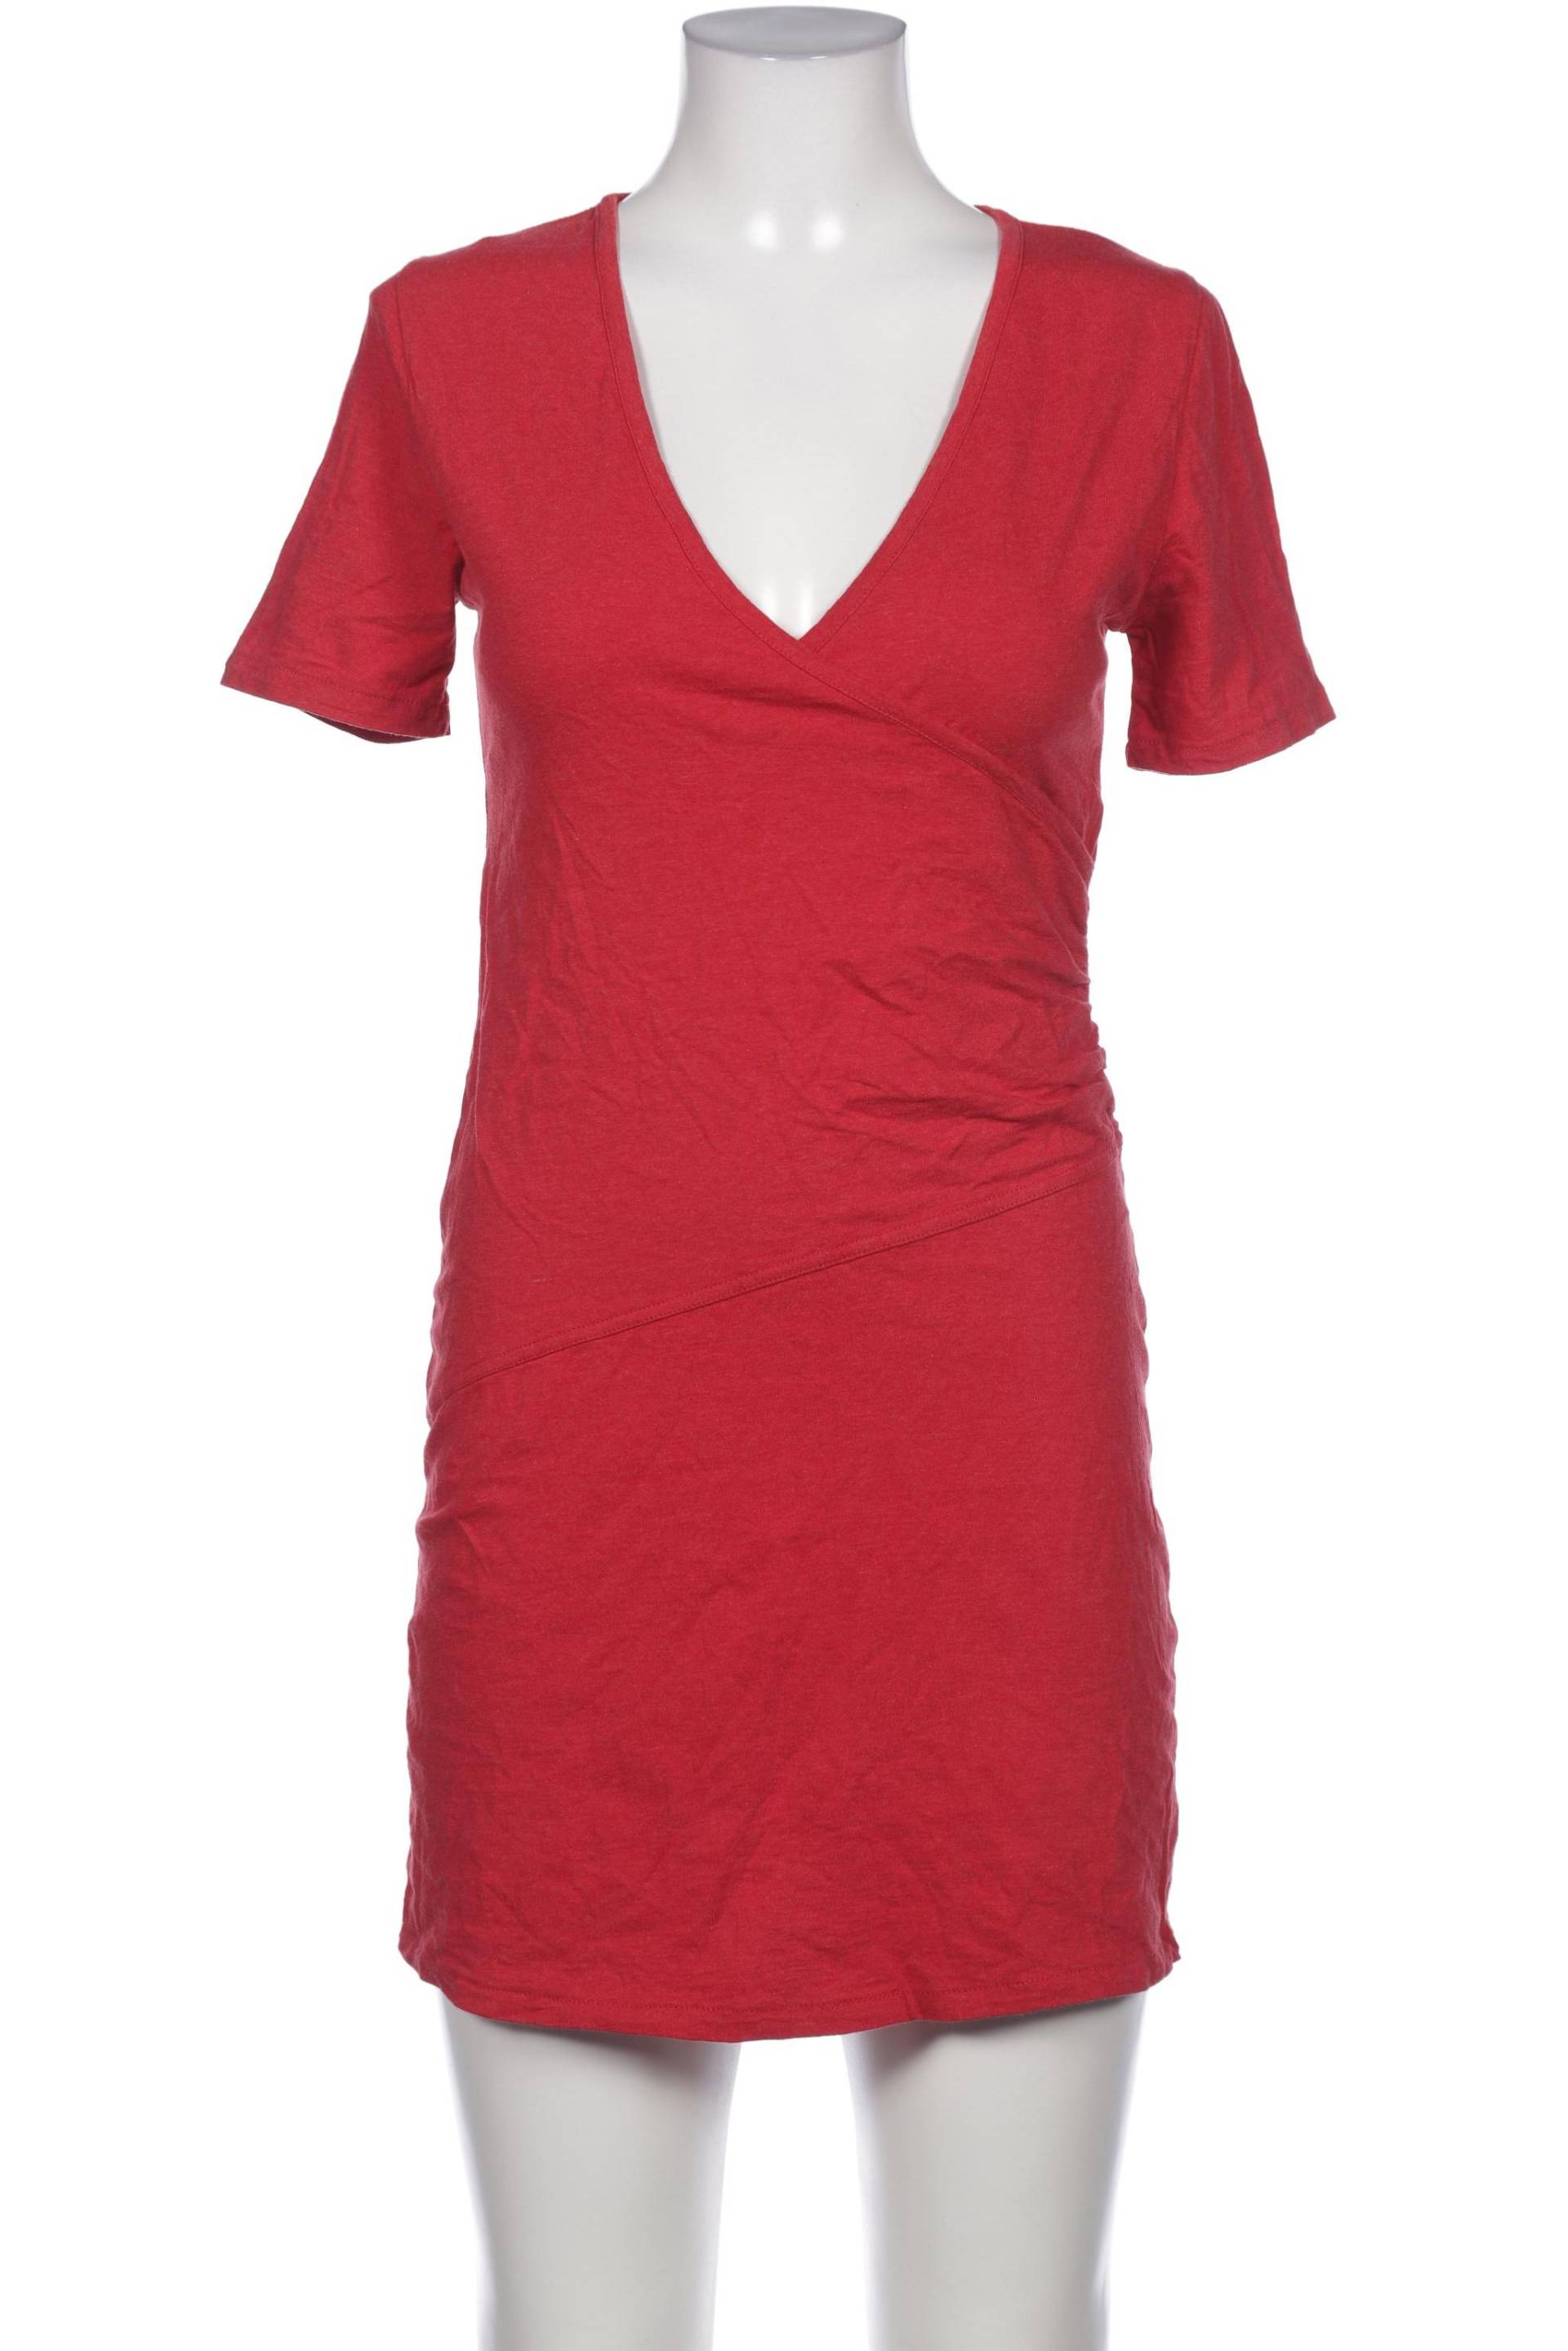 Deerberg Damen Kleid, rot von Deerberg